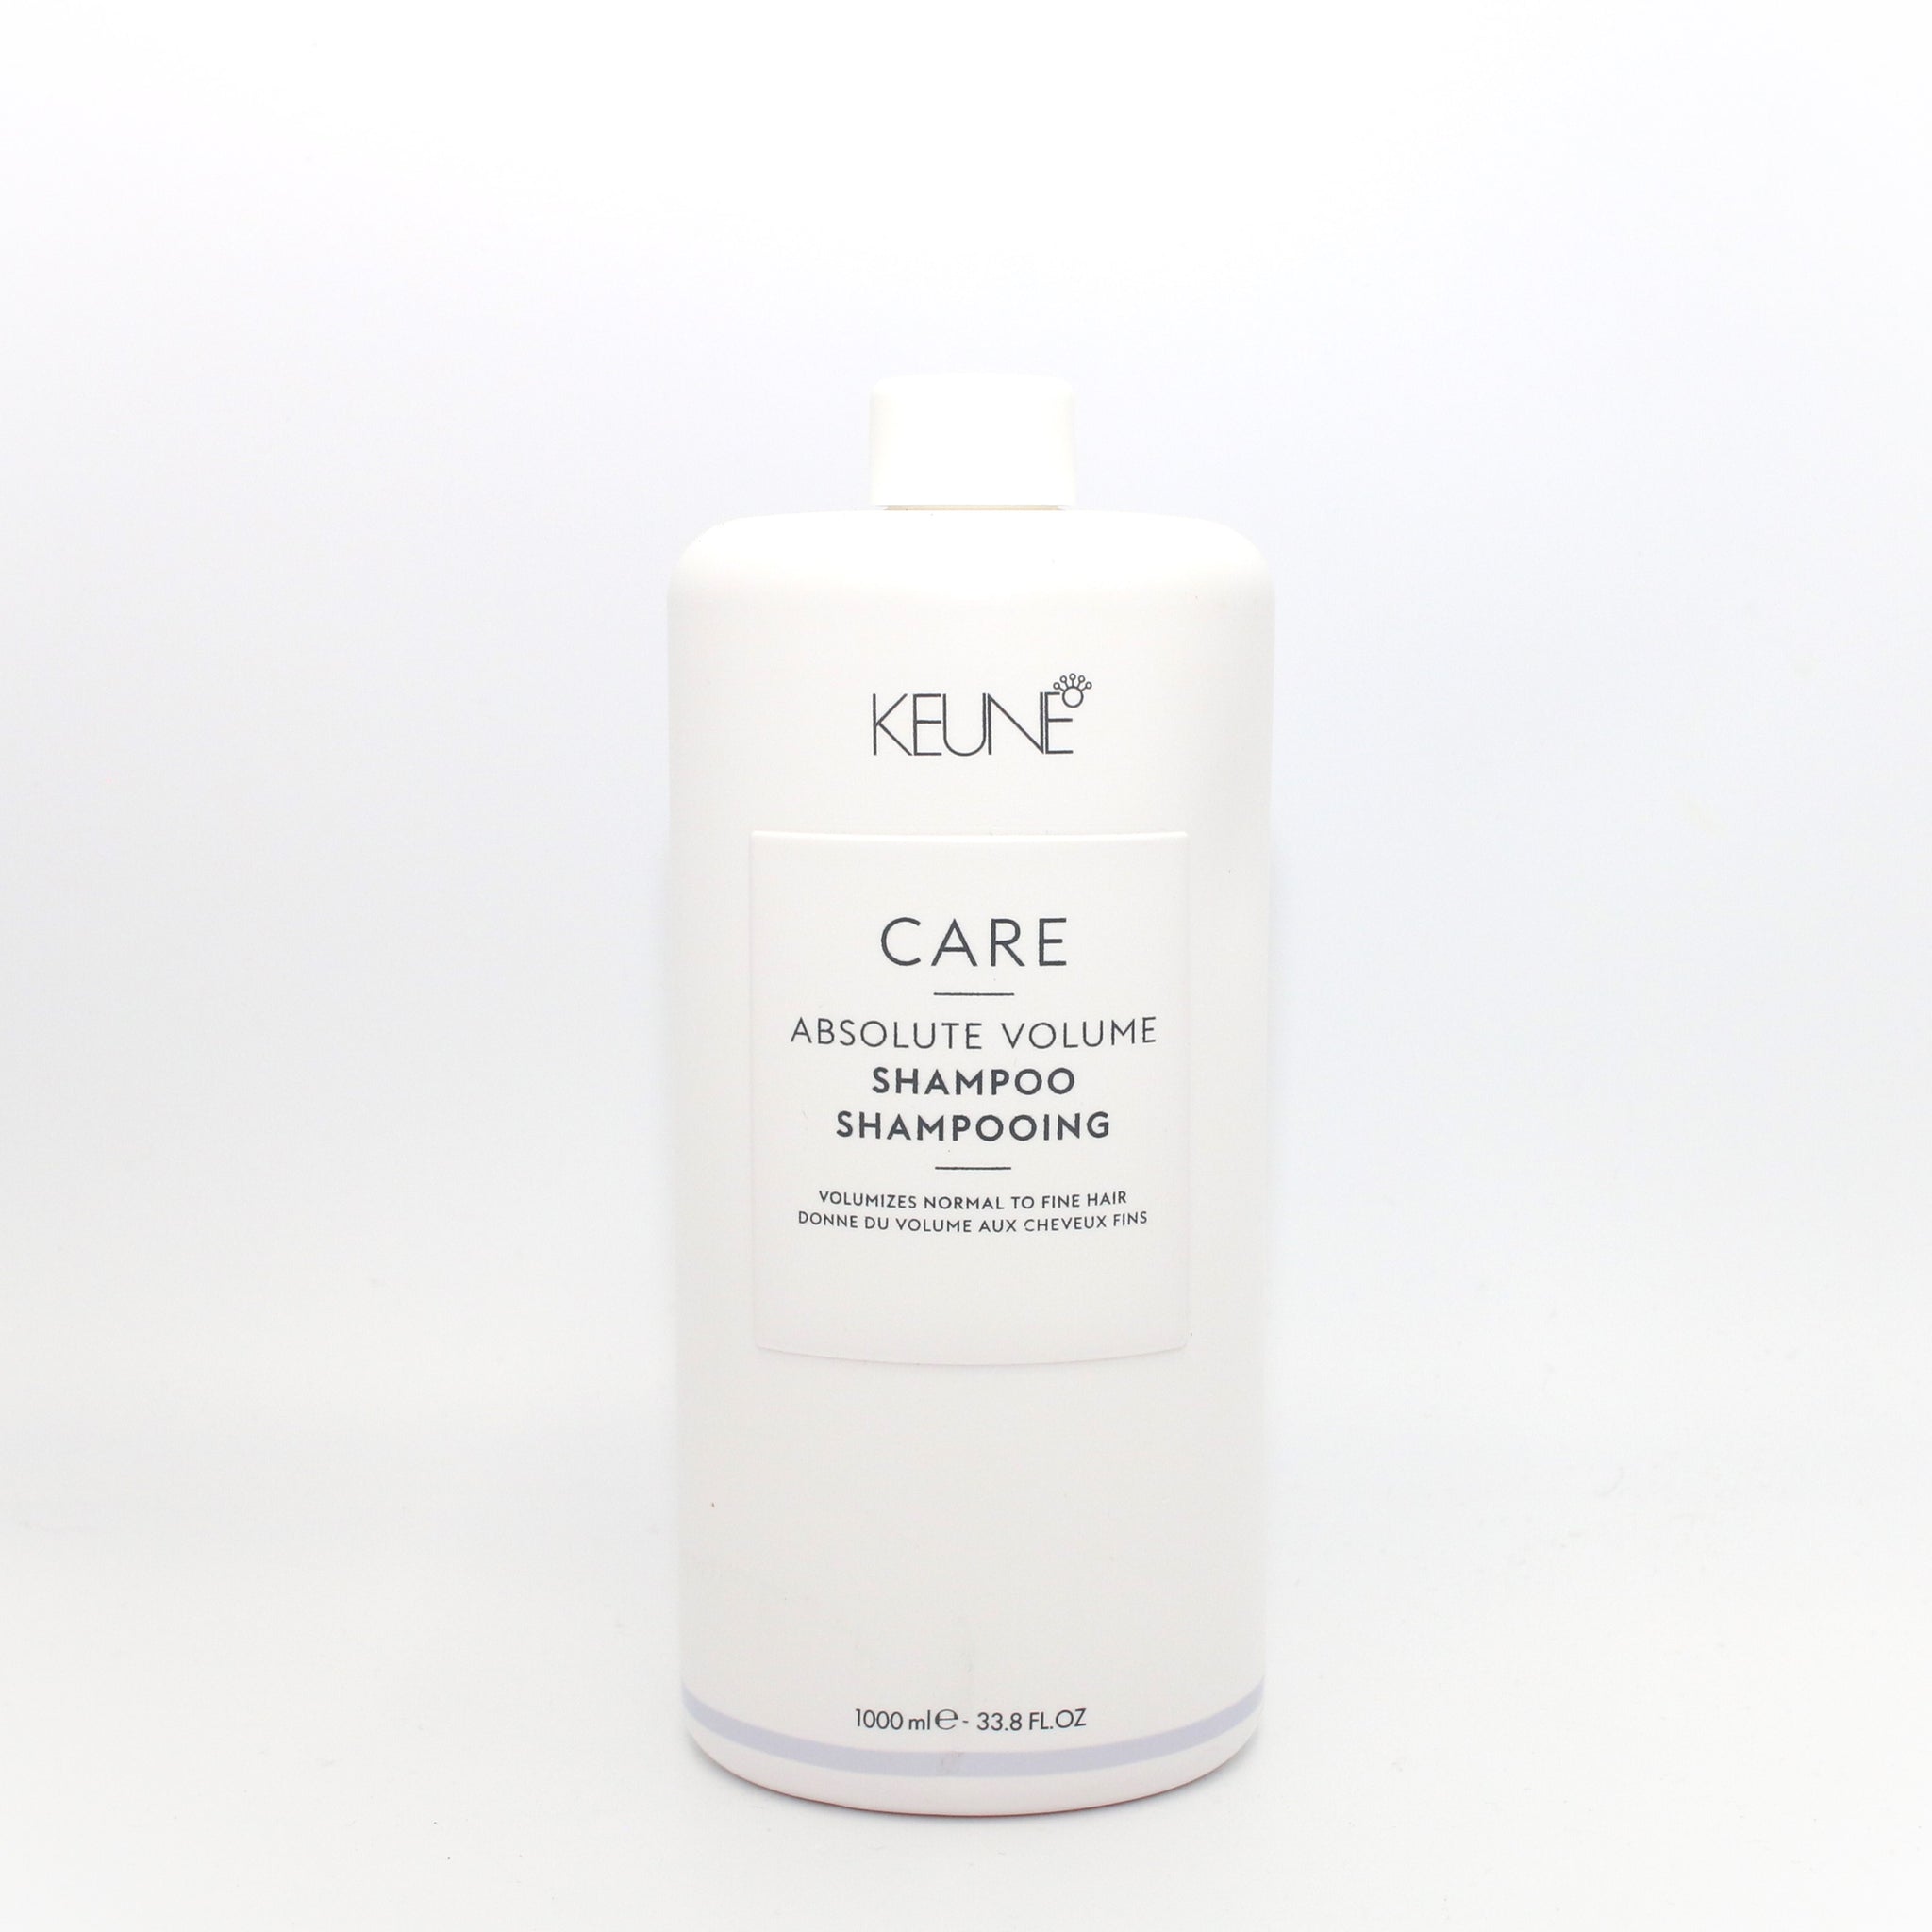 KEUNE Care Absolute Volume Shampooing 33.8 oz